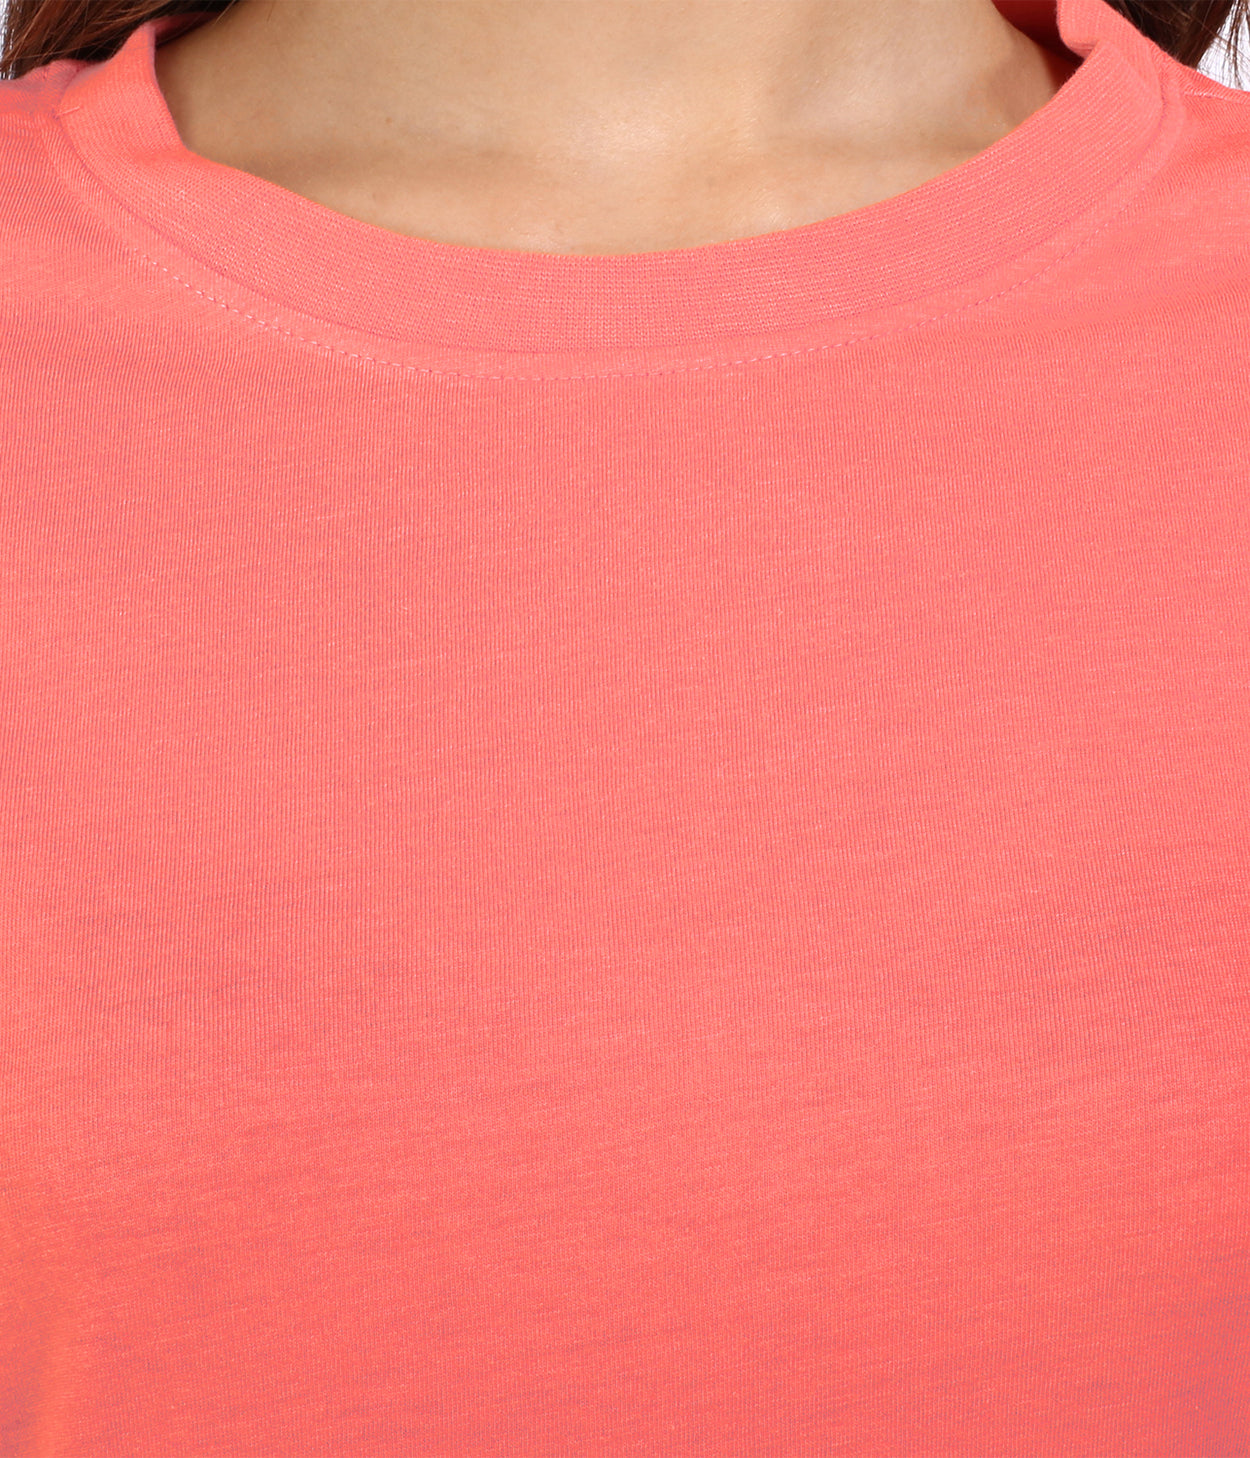 Coral Melange Womens T-Shirt